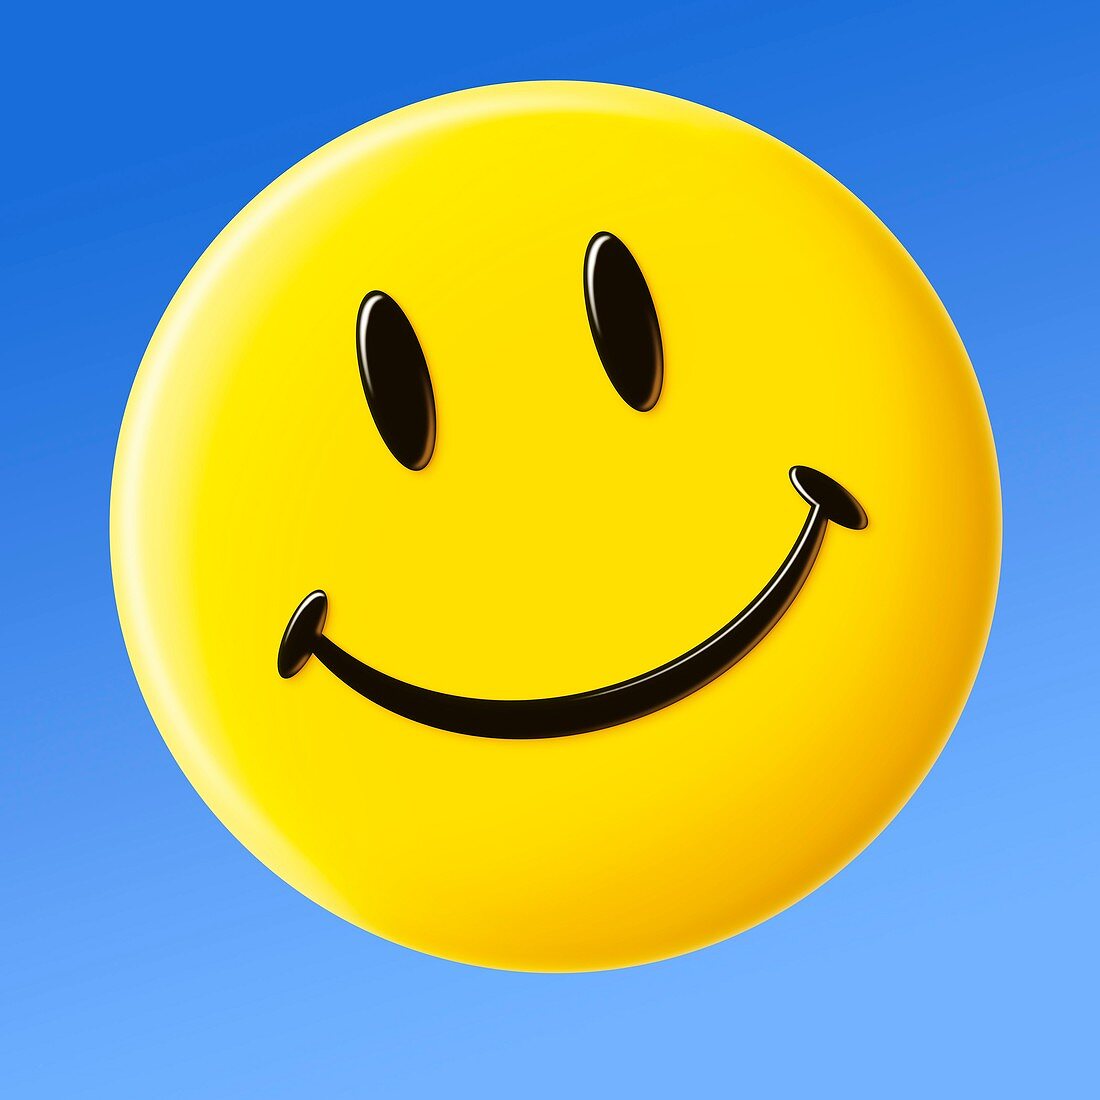 Smiley face symbol